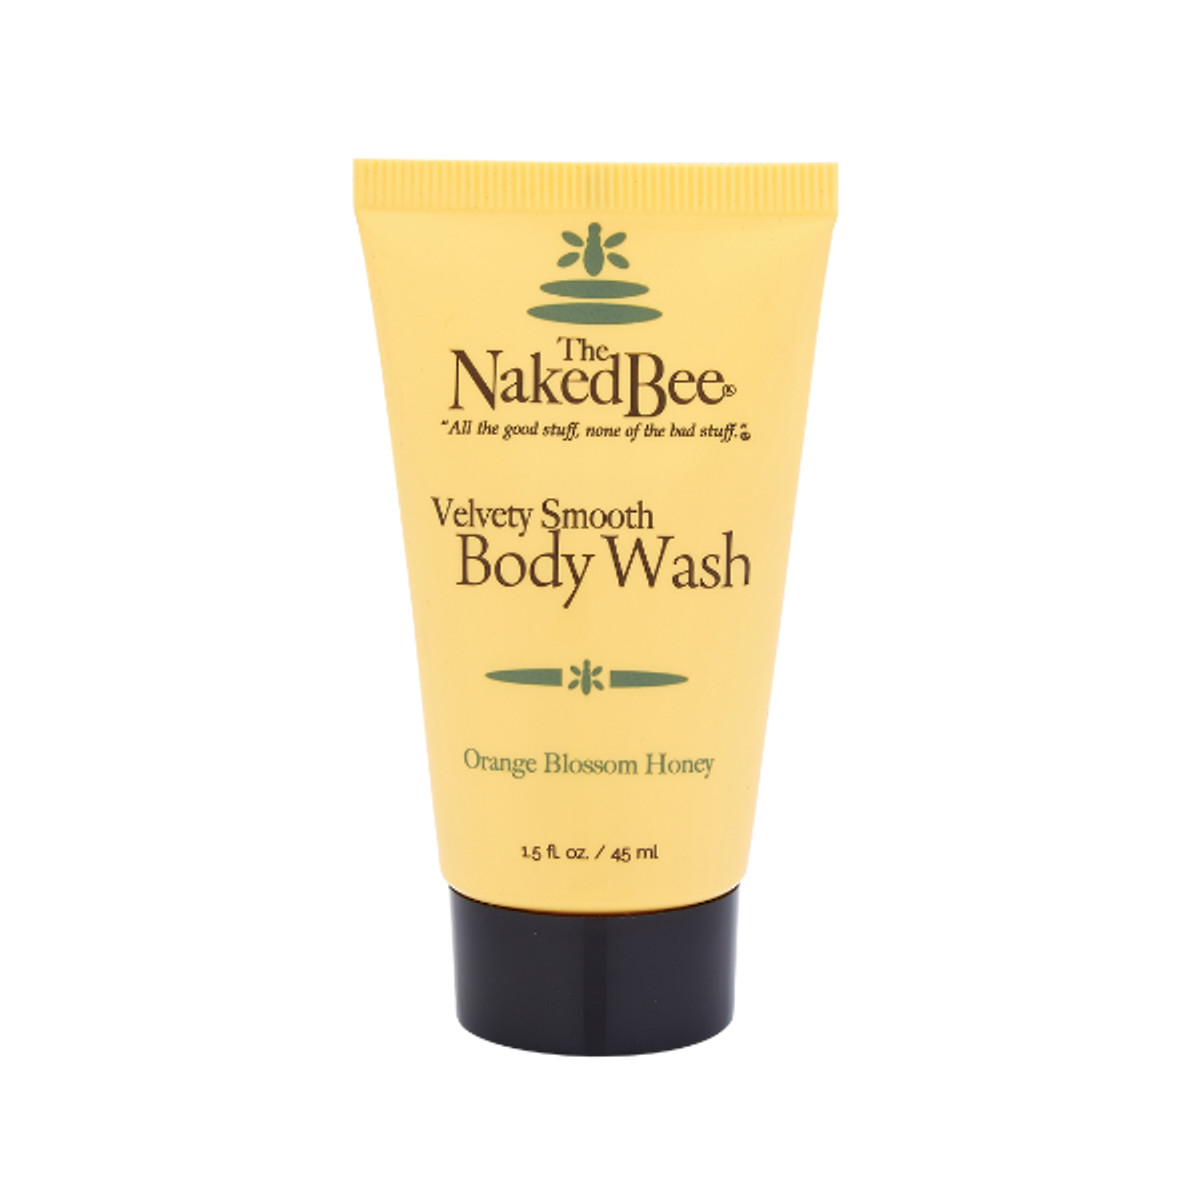 Naked Bee Body Wash